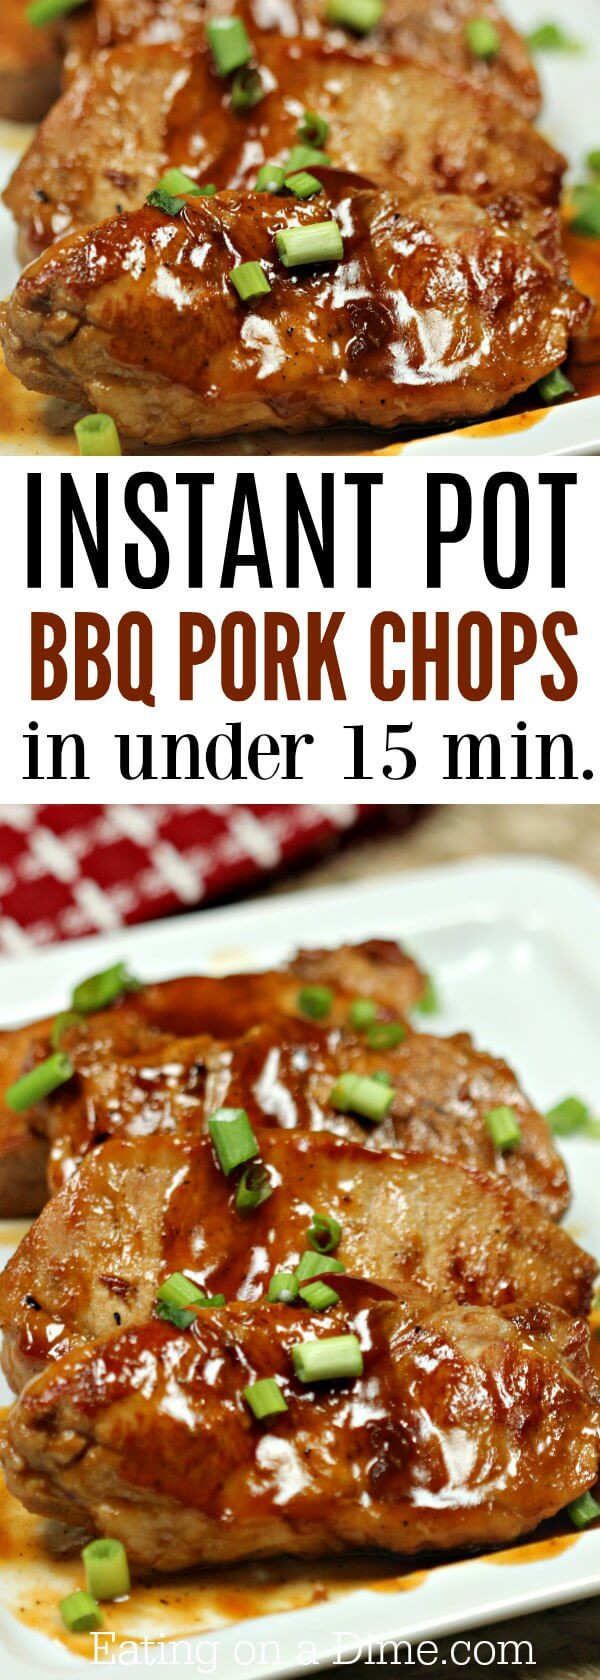 Stuffed Pork Chops Instant Pot
 Instant Pot BBQ Pork Chops Recipe Easy Dinner Idea